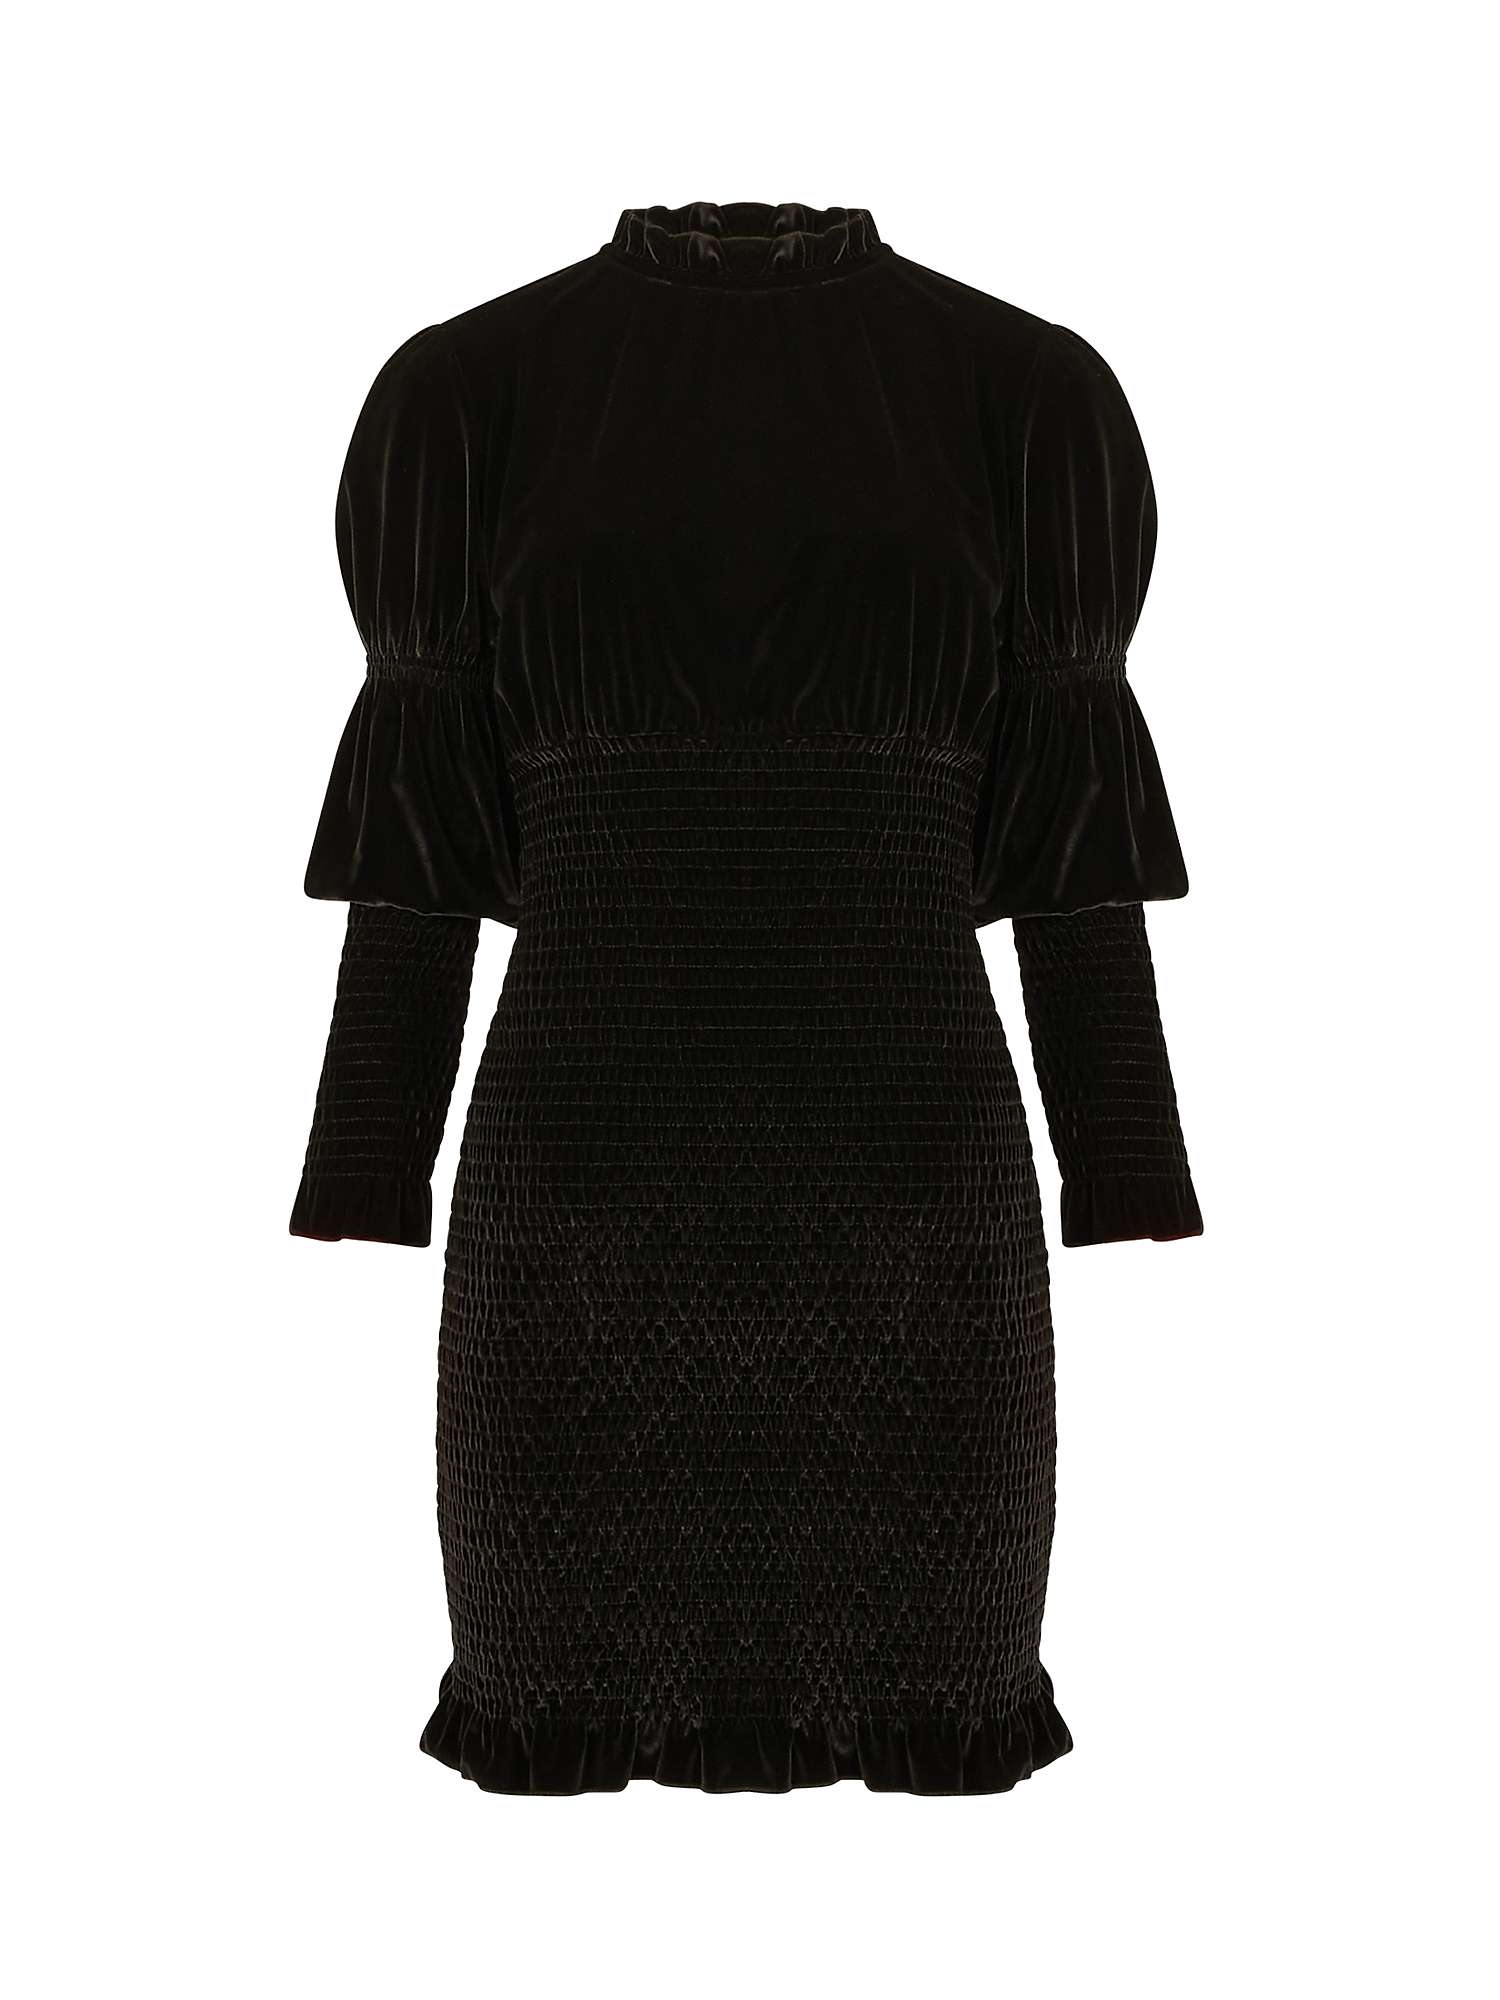 French Connection Sula Velvet Jersey Mini Dress, Black at John Lewis ...